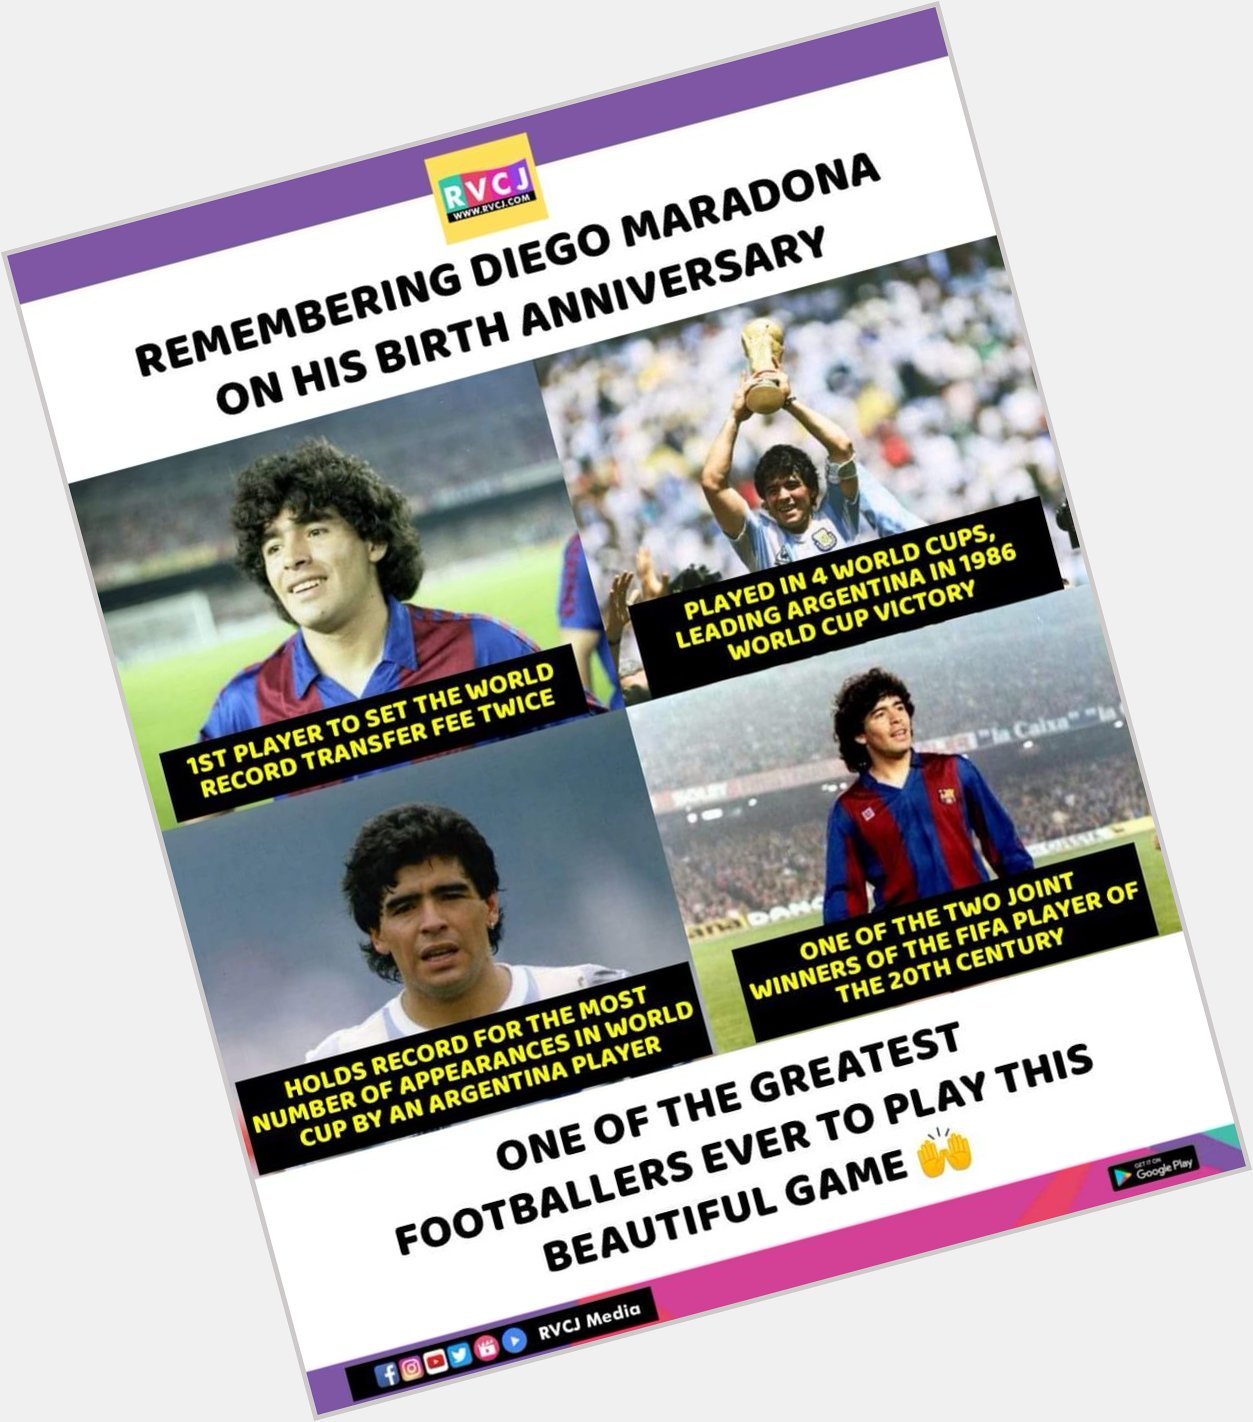 Happy Birthday Diego maradona 